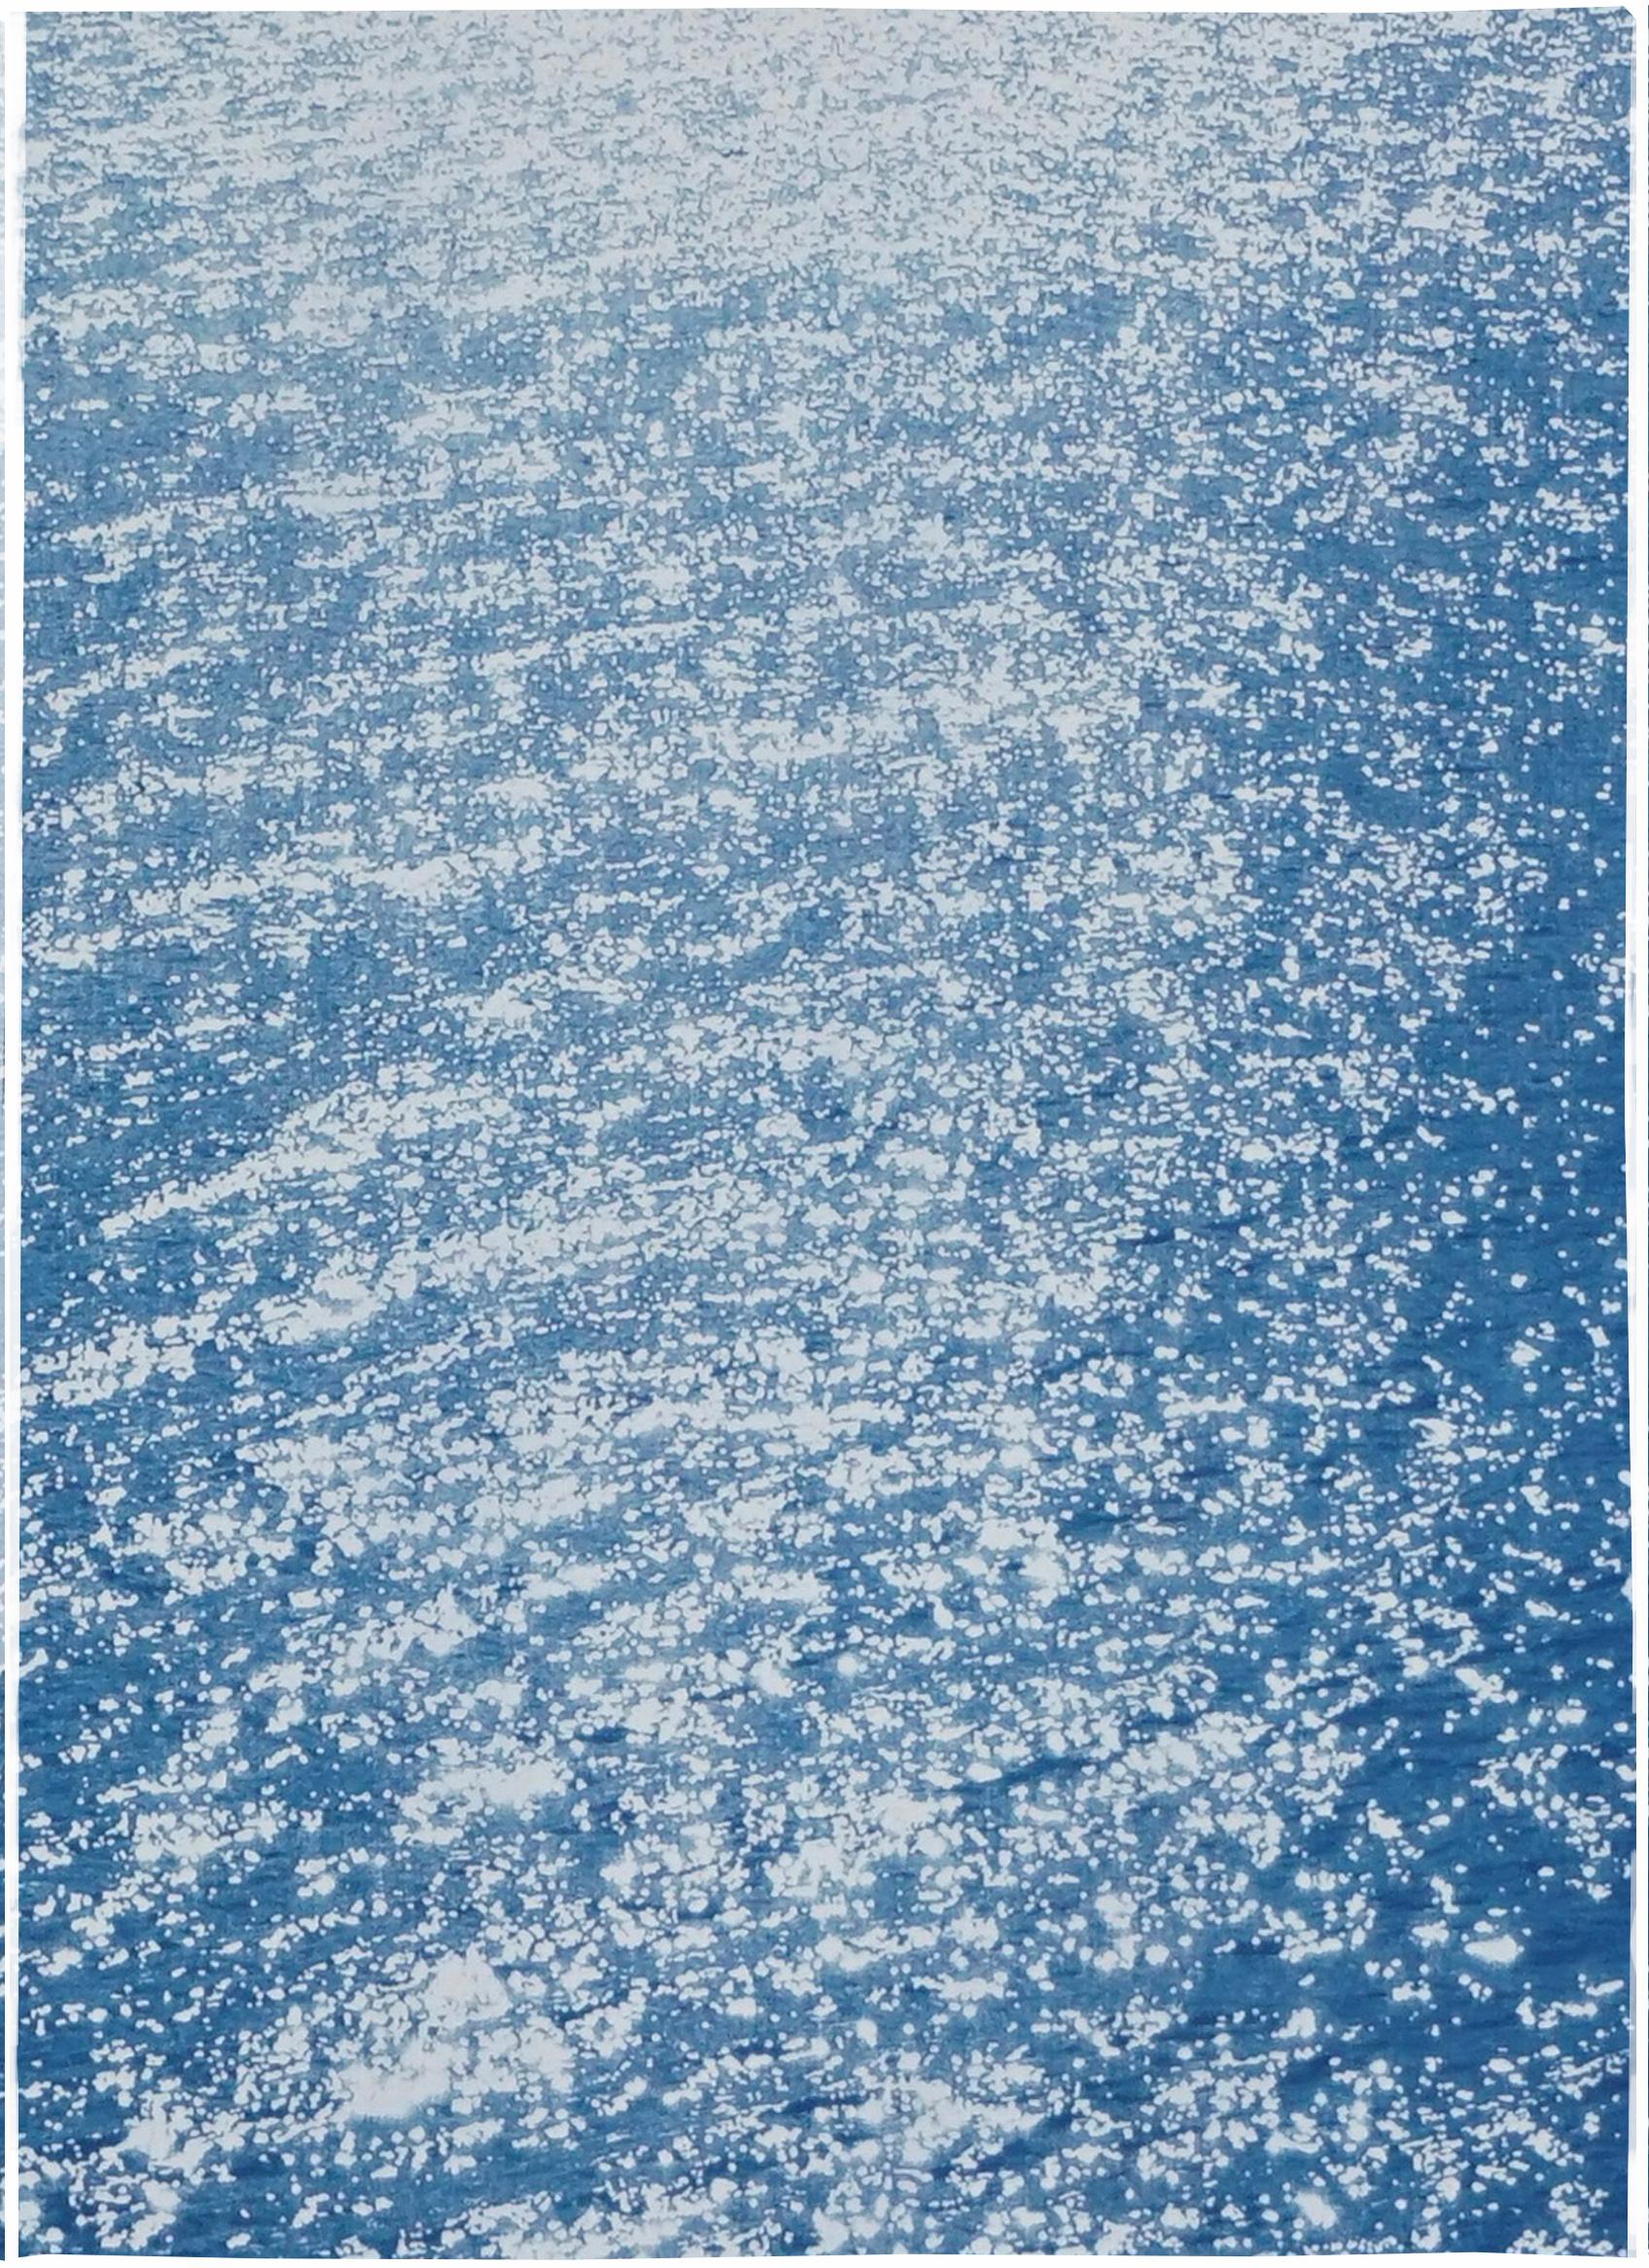 Splendorous Amalfi Coast Seascape , Colossal Cyanotype Triptych on Paper, 2020 - Minimalist Print by Kind of Cyan